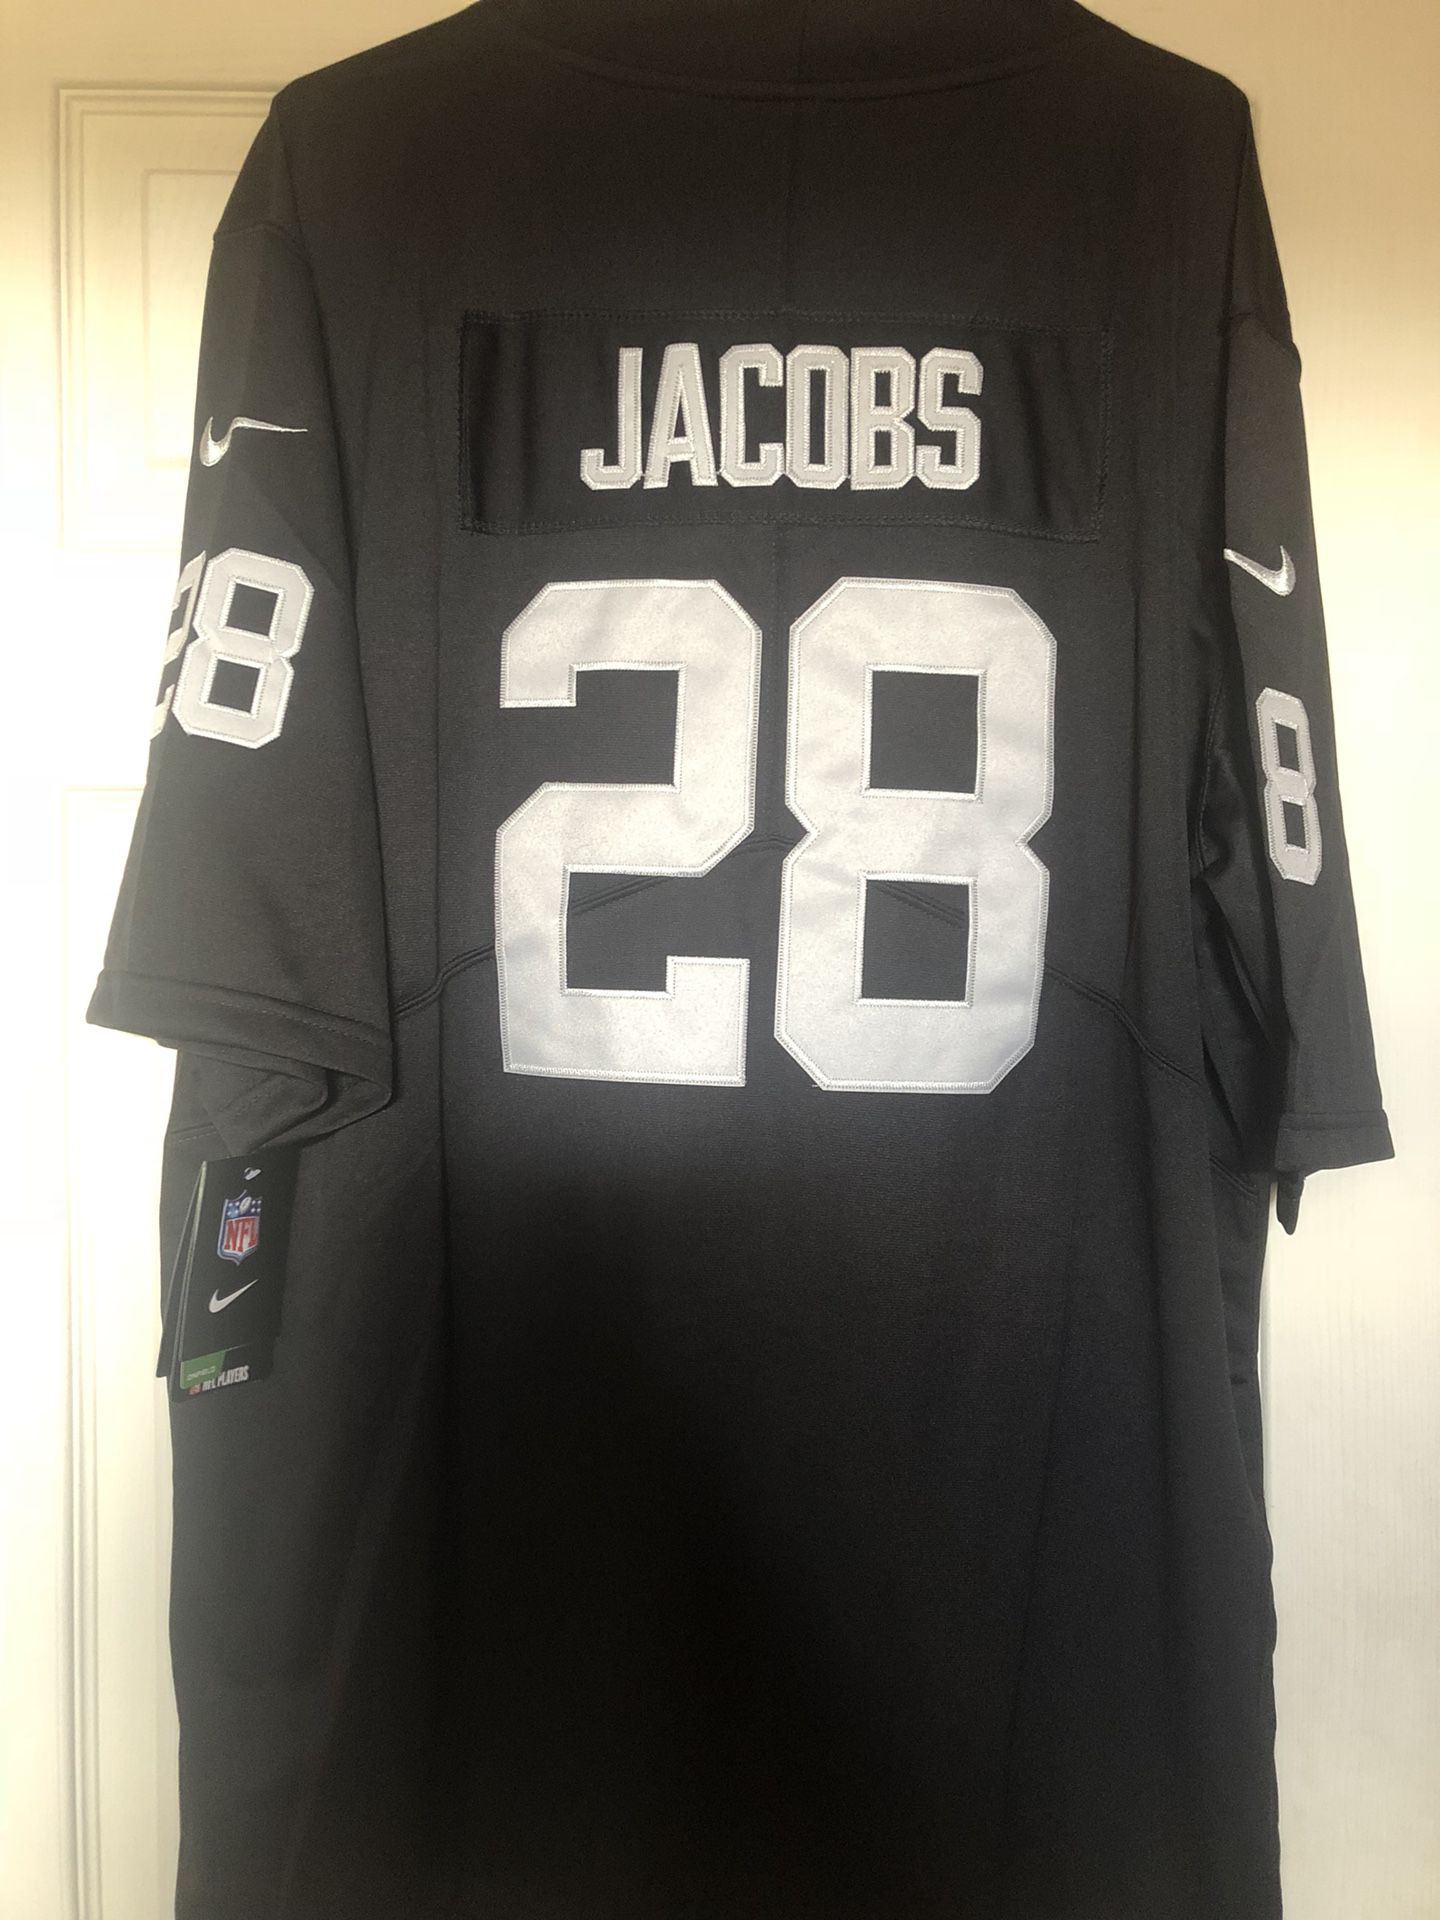 Raiders jersey #28 Jacobs